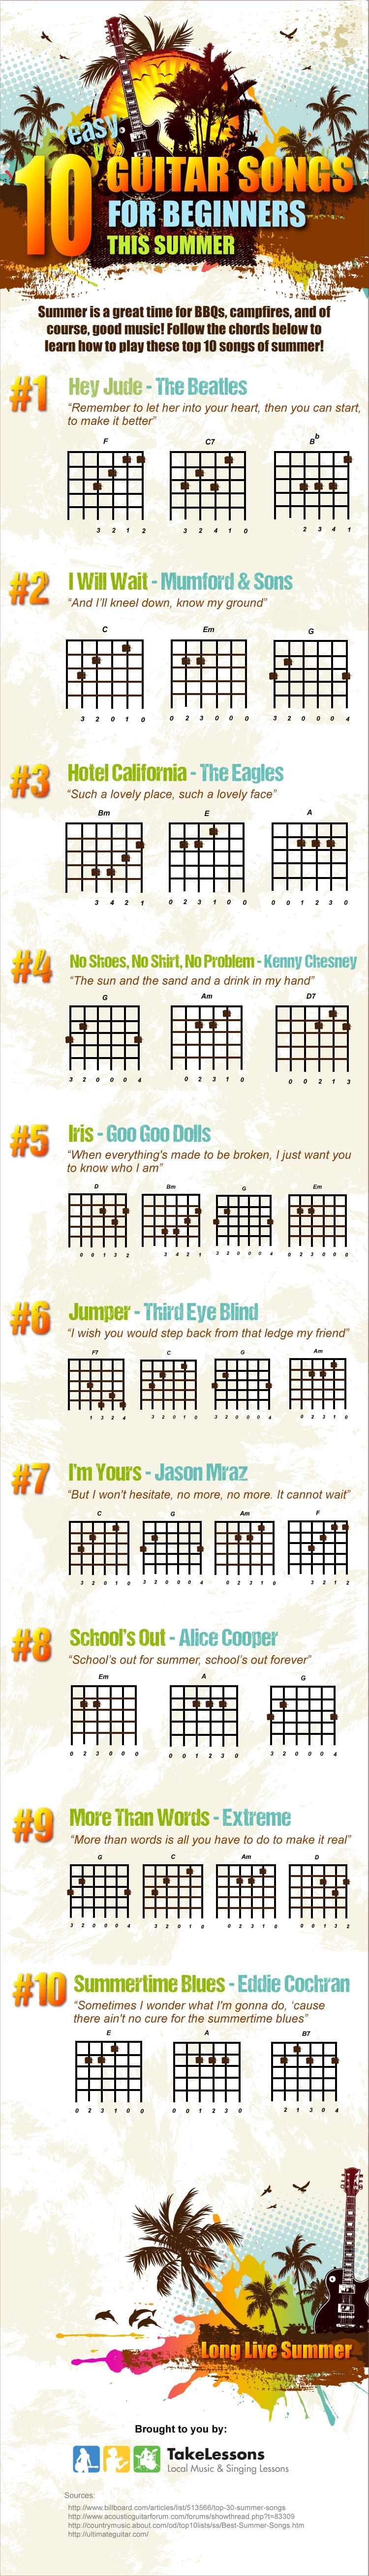 10 Guitar Songs for Beginners